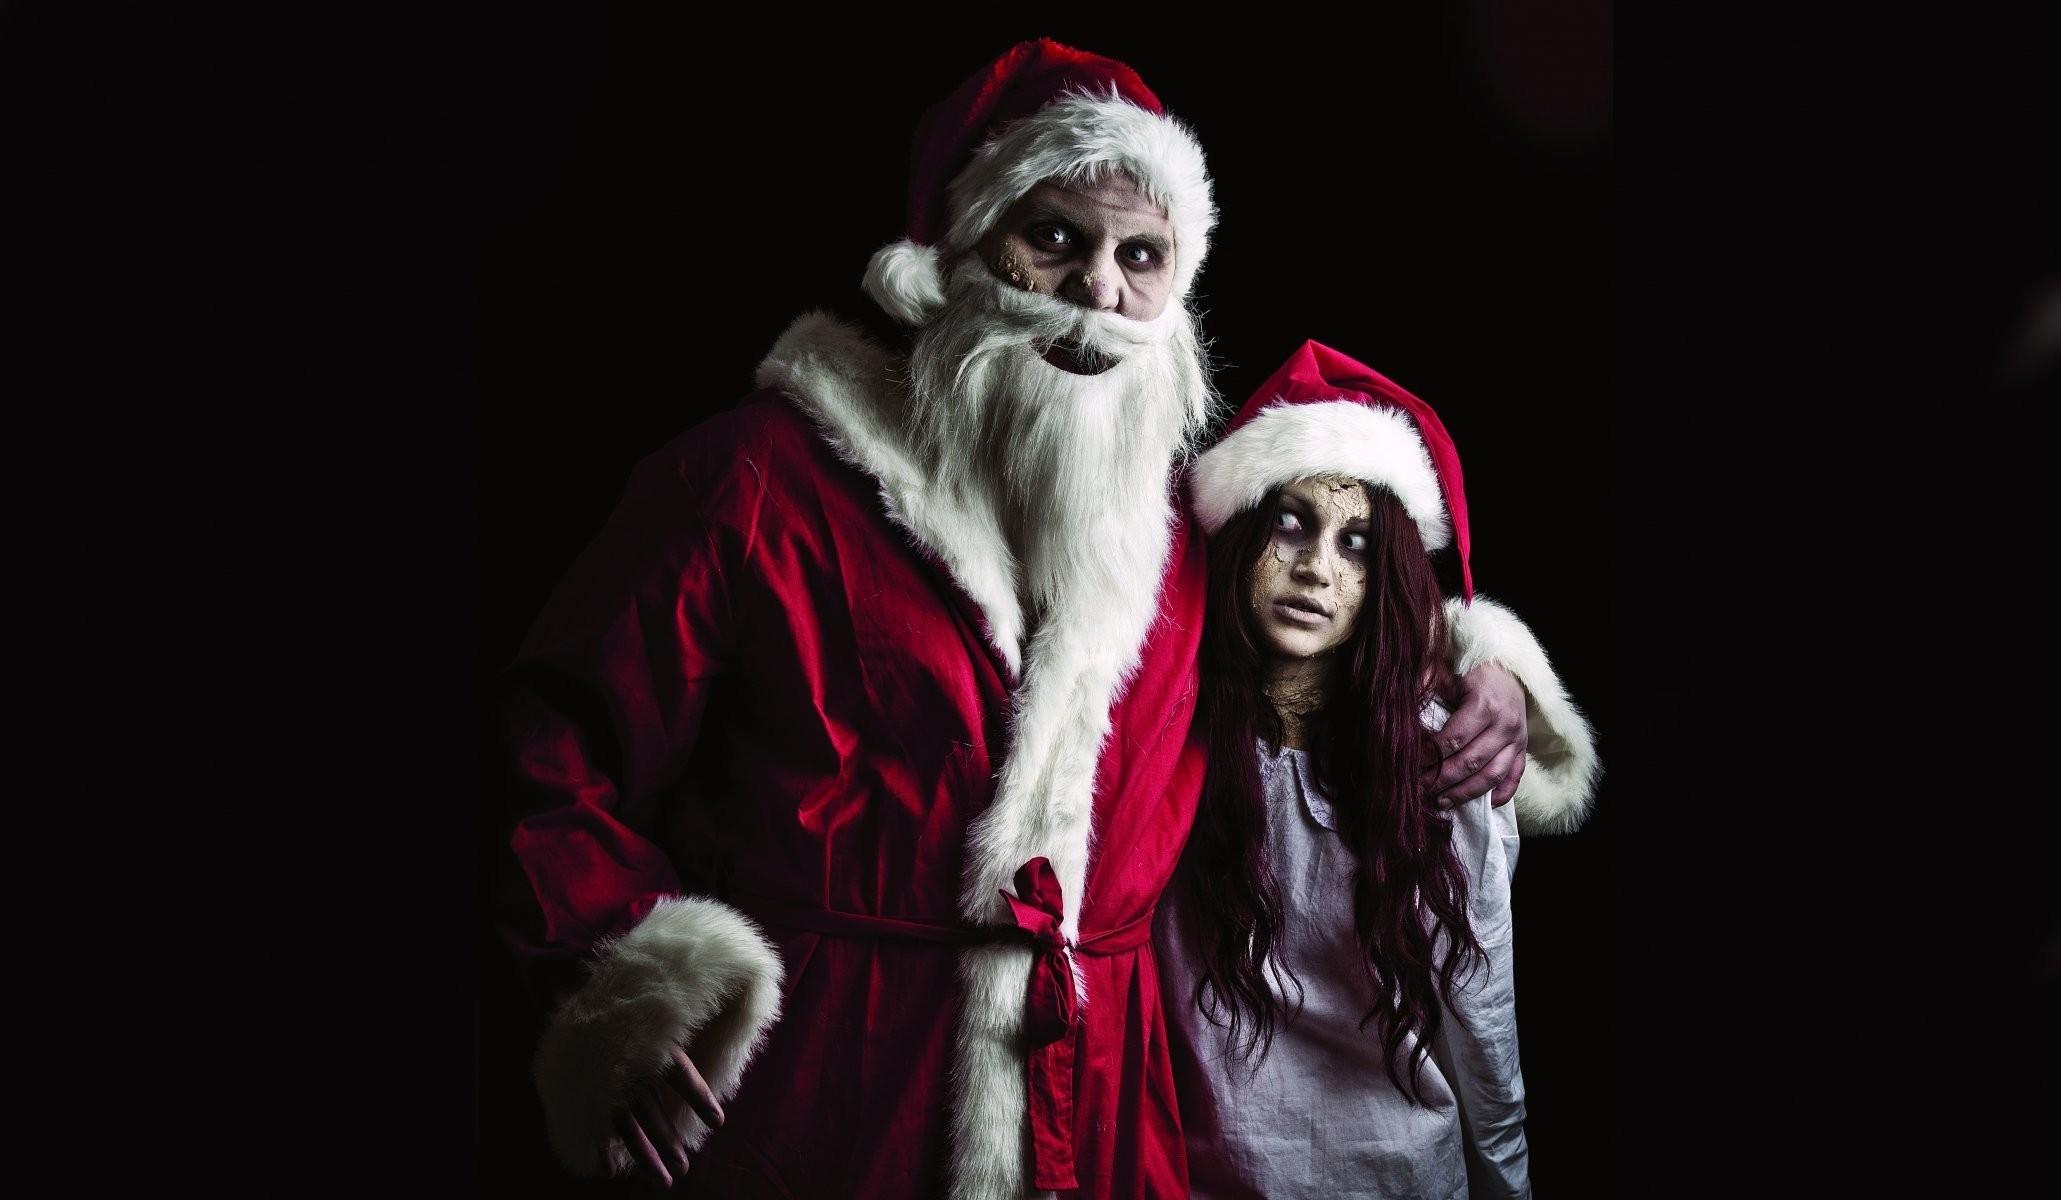 4866 Creepy Christmas Images Stock Photos  Vectors  Shutterstock